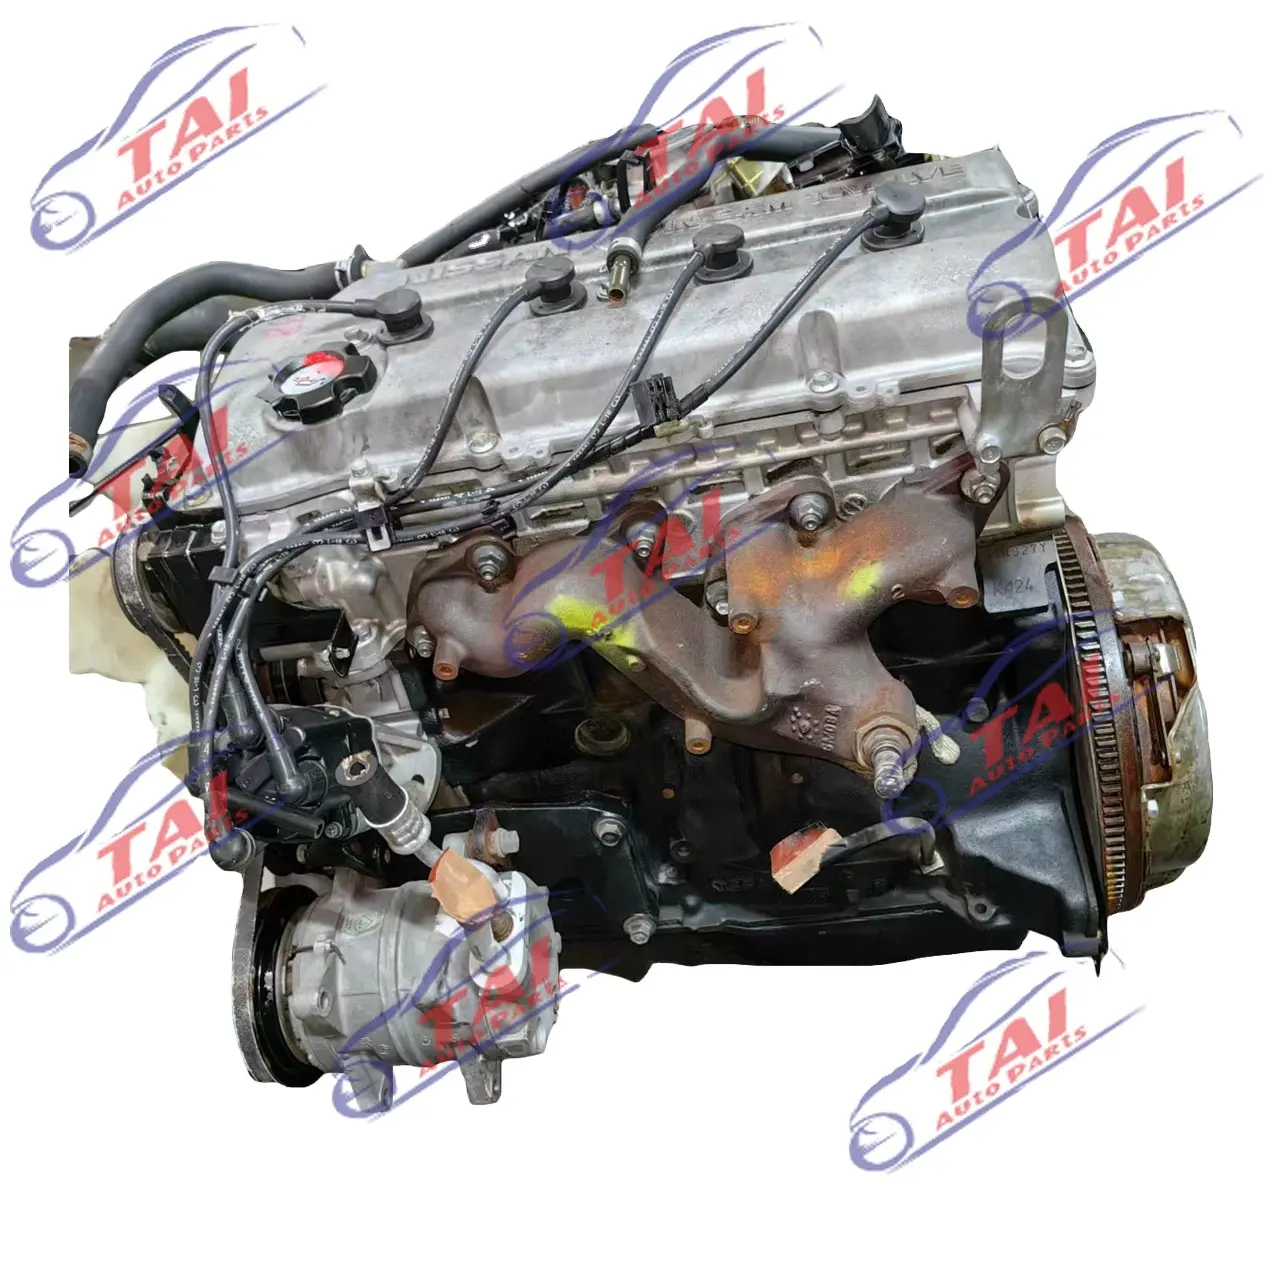 Original Japanese Petrol Engine KA24 KA24 F45 KA24DE Motor For Nissan, Truck Parts Accessories